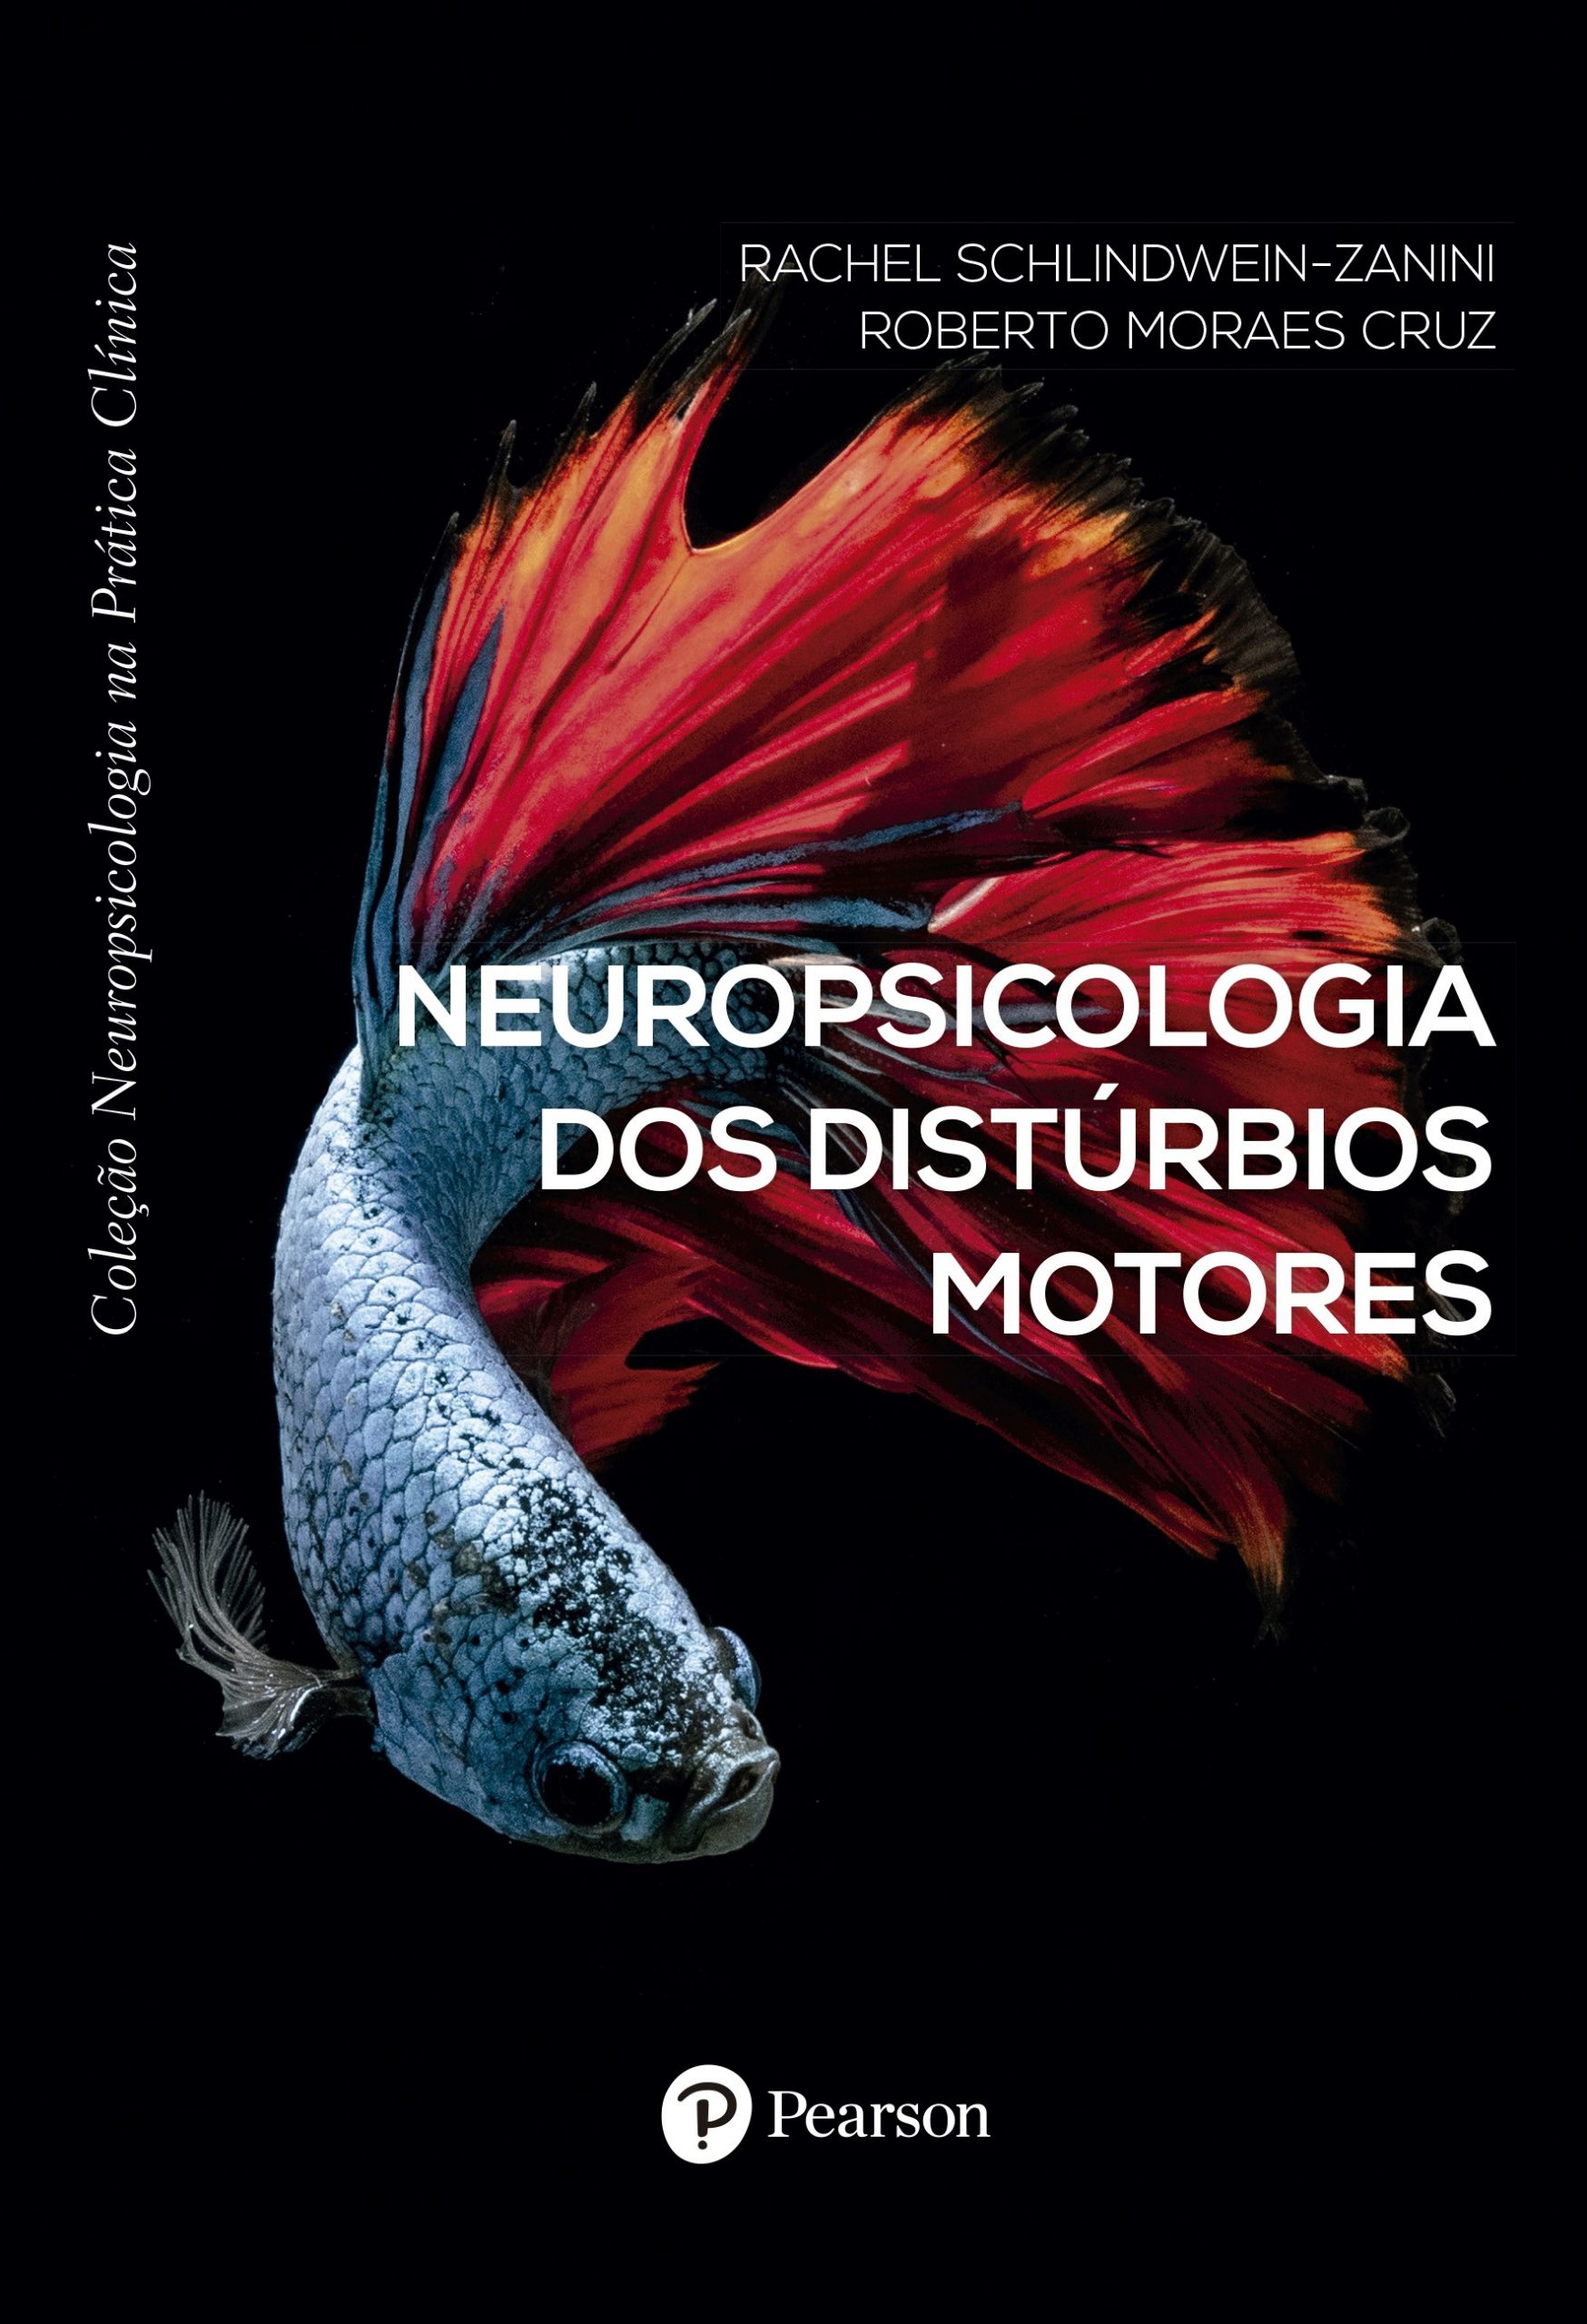 Neuropsicologia dos distúrbios motores